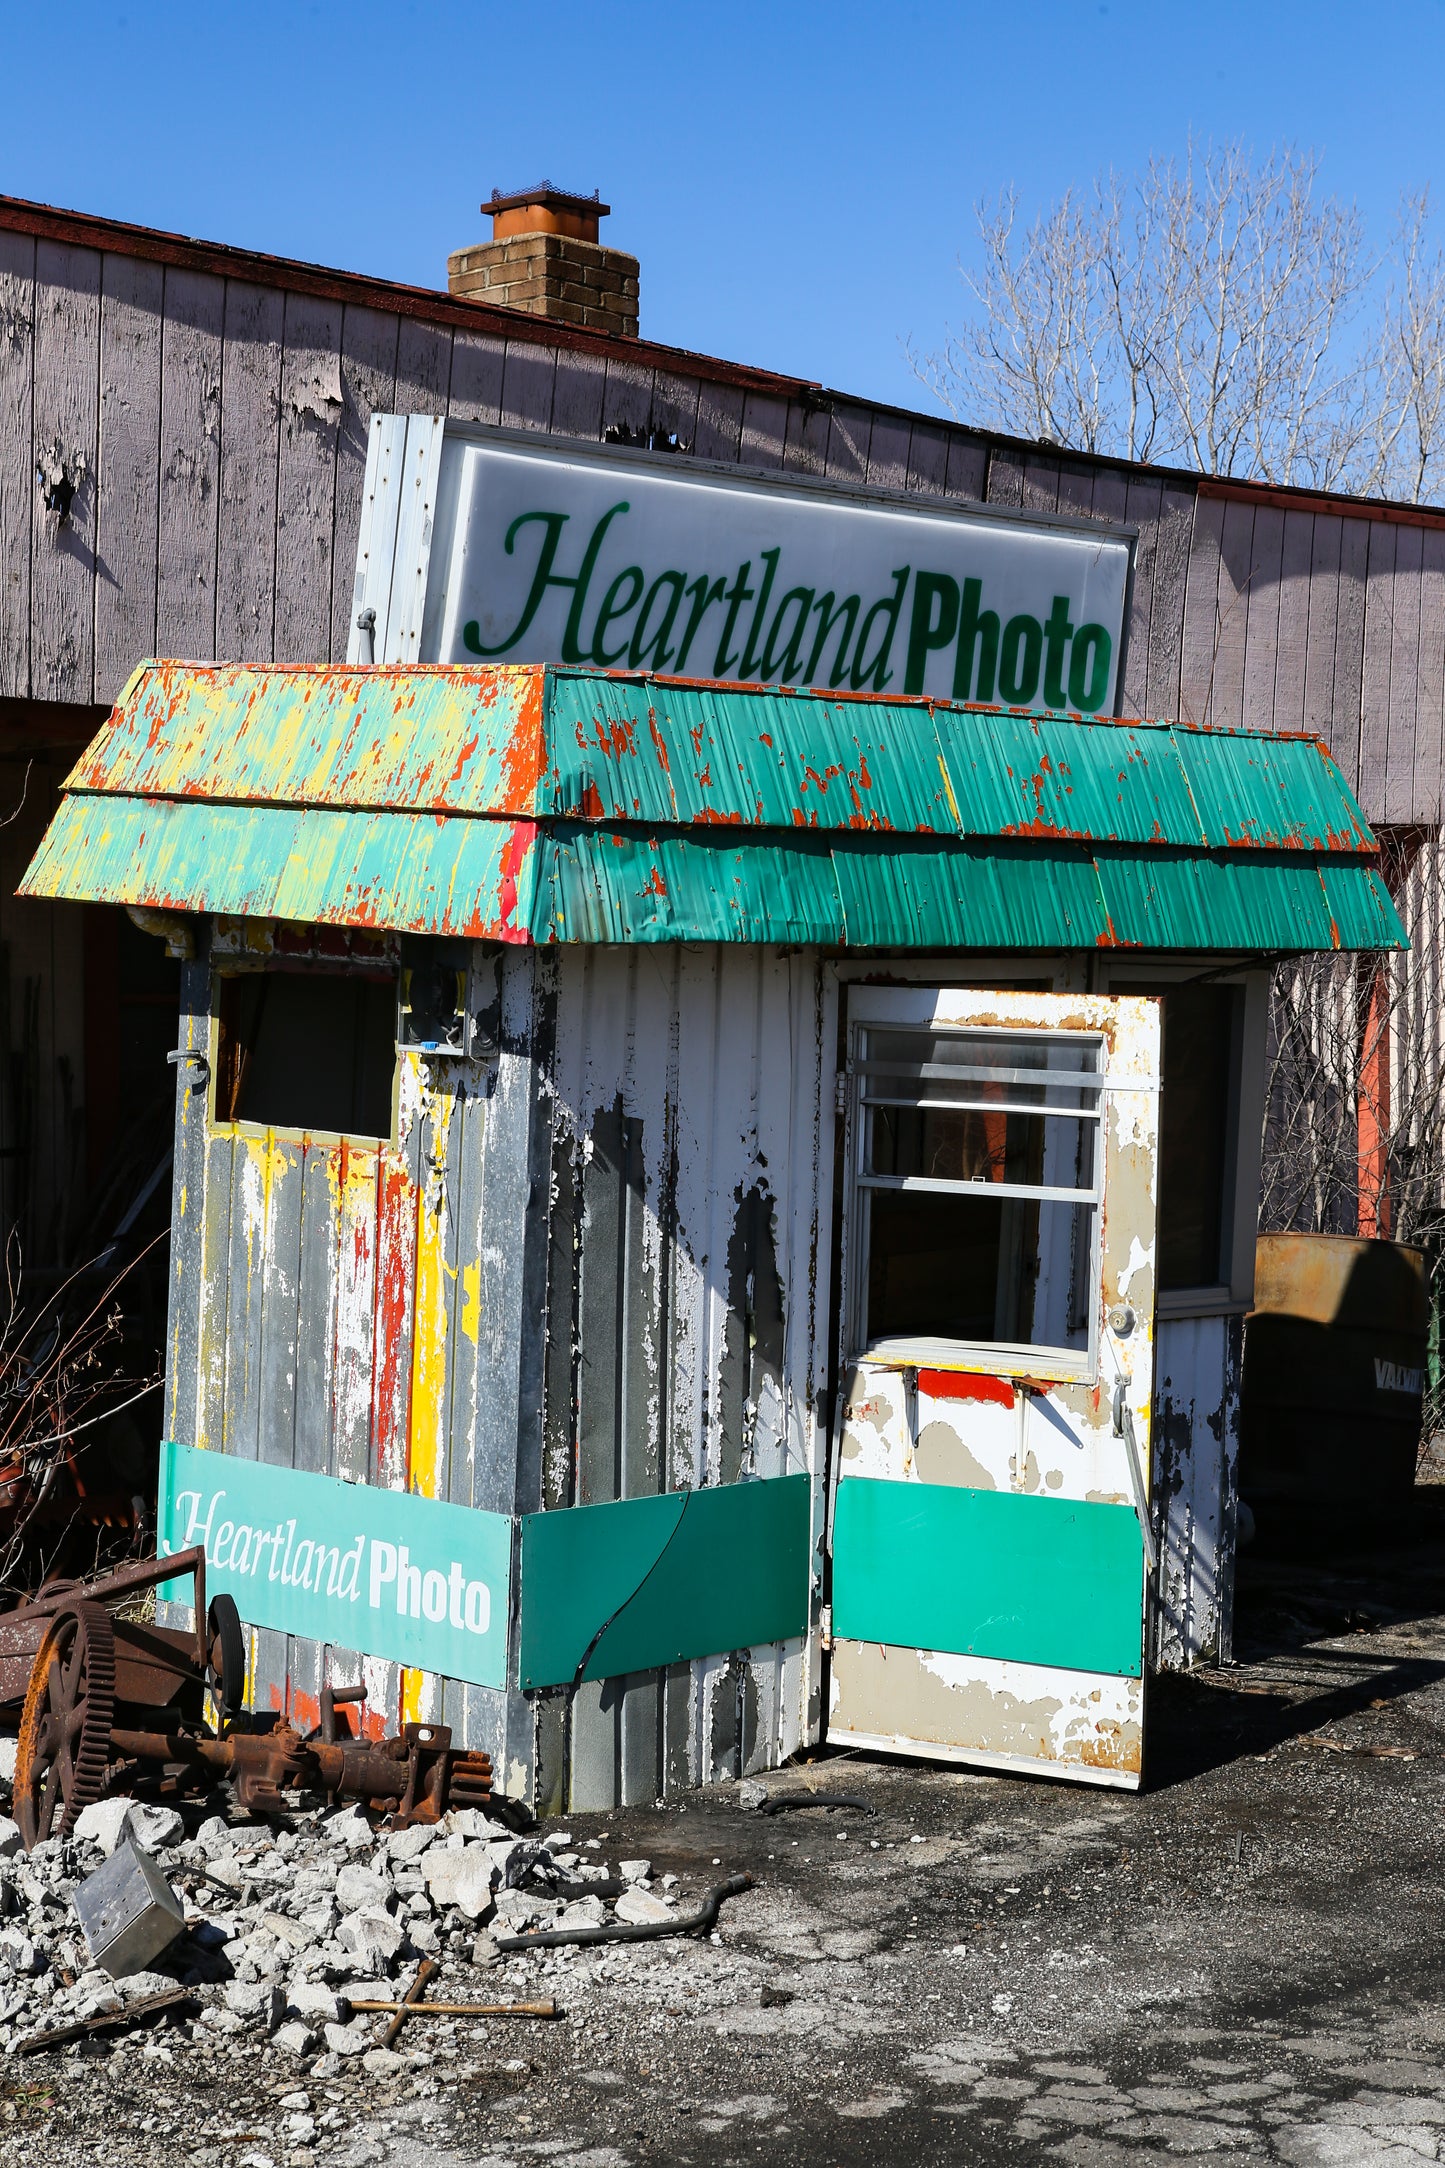 Abandoned Heartland Photo booth, photographic print